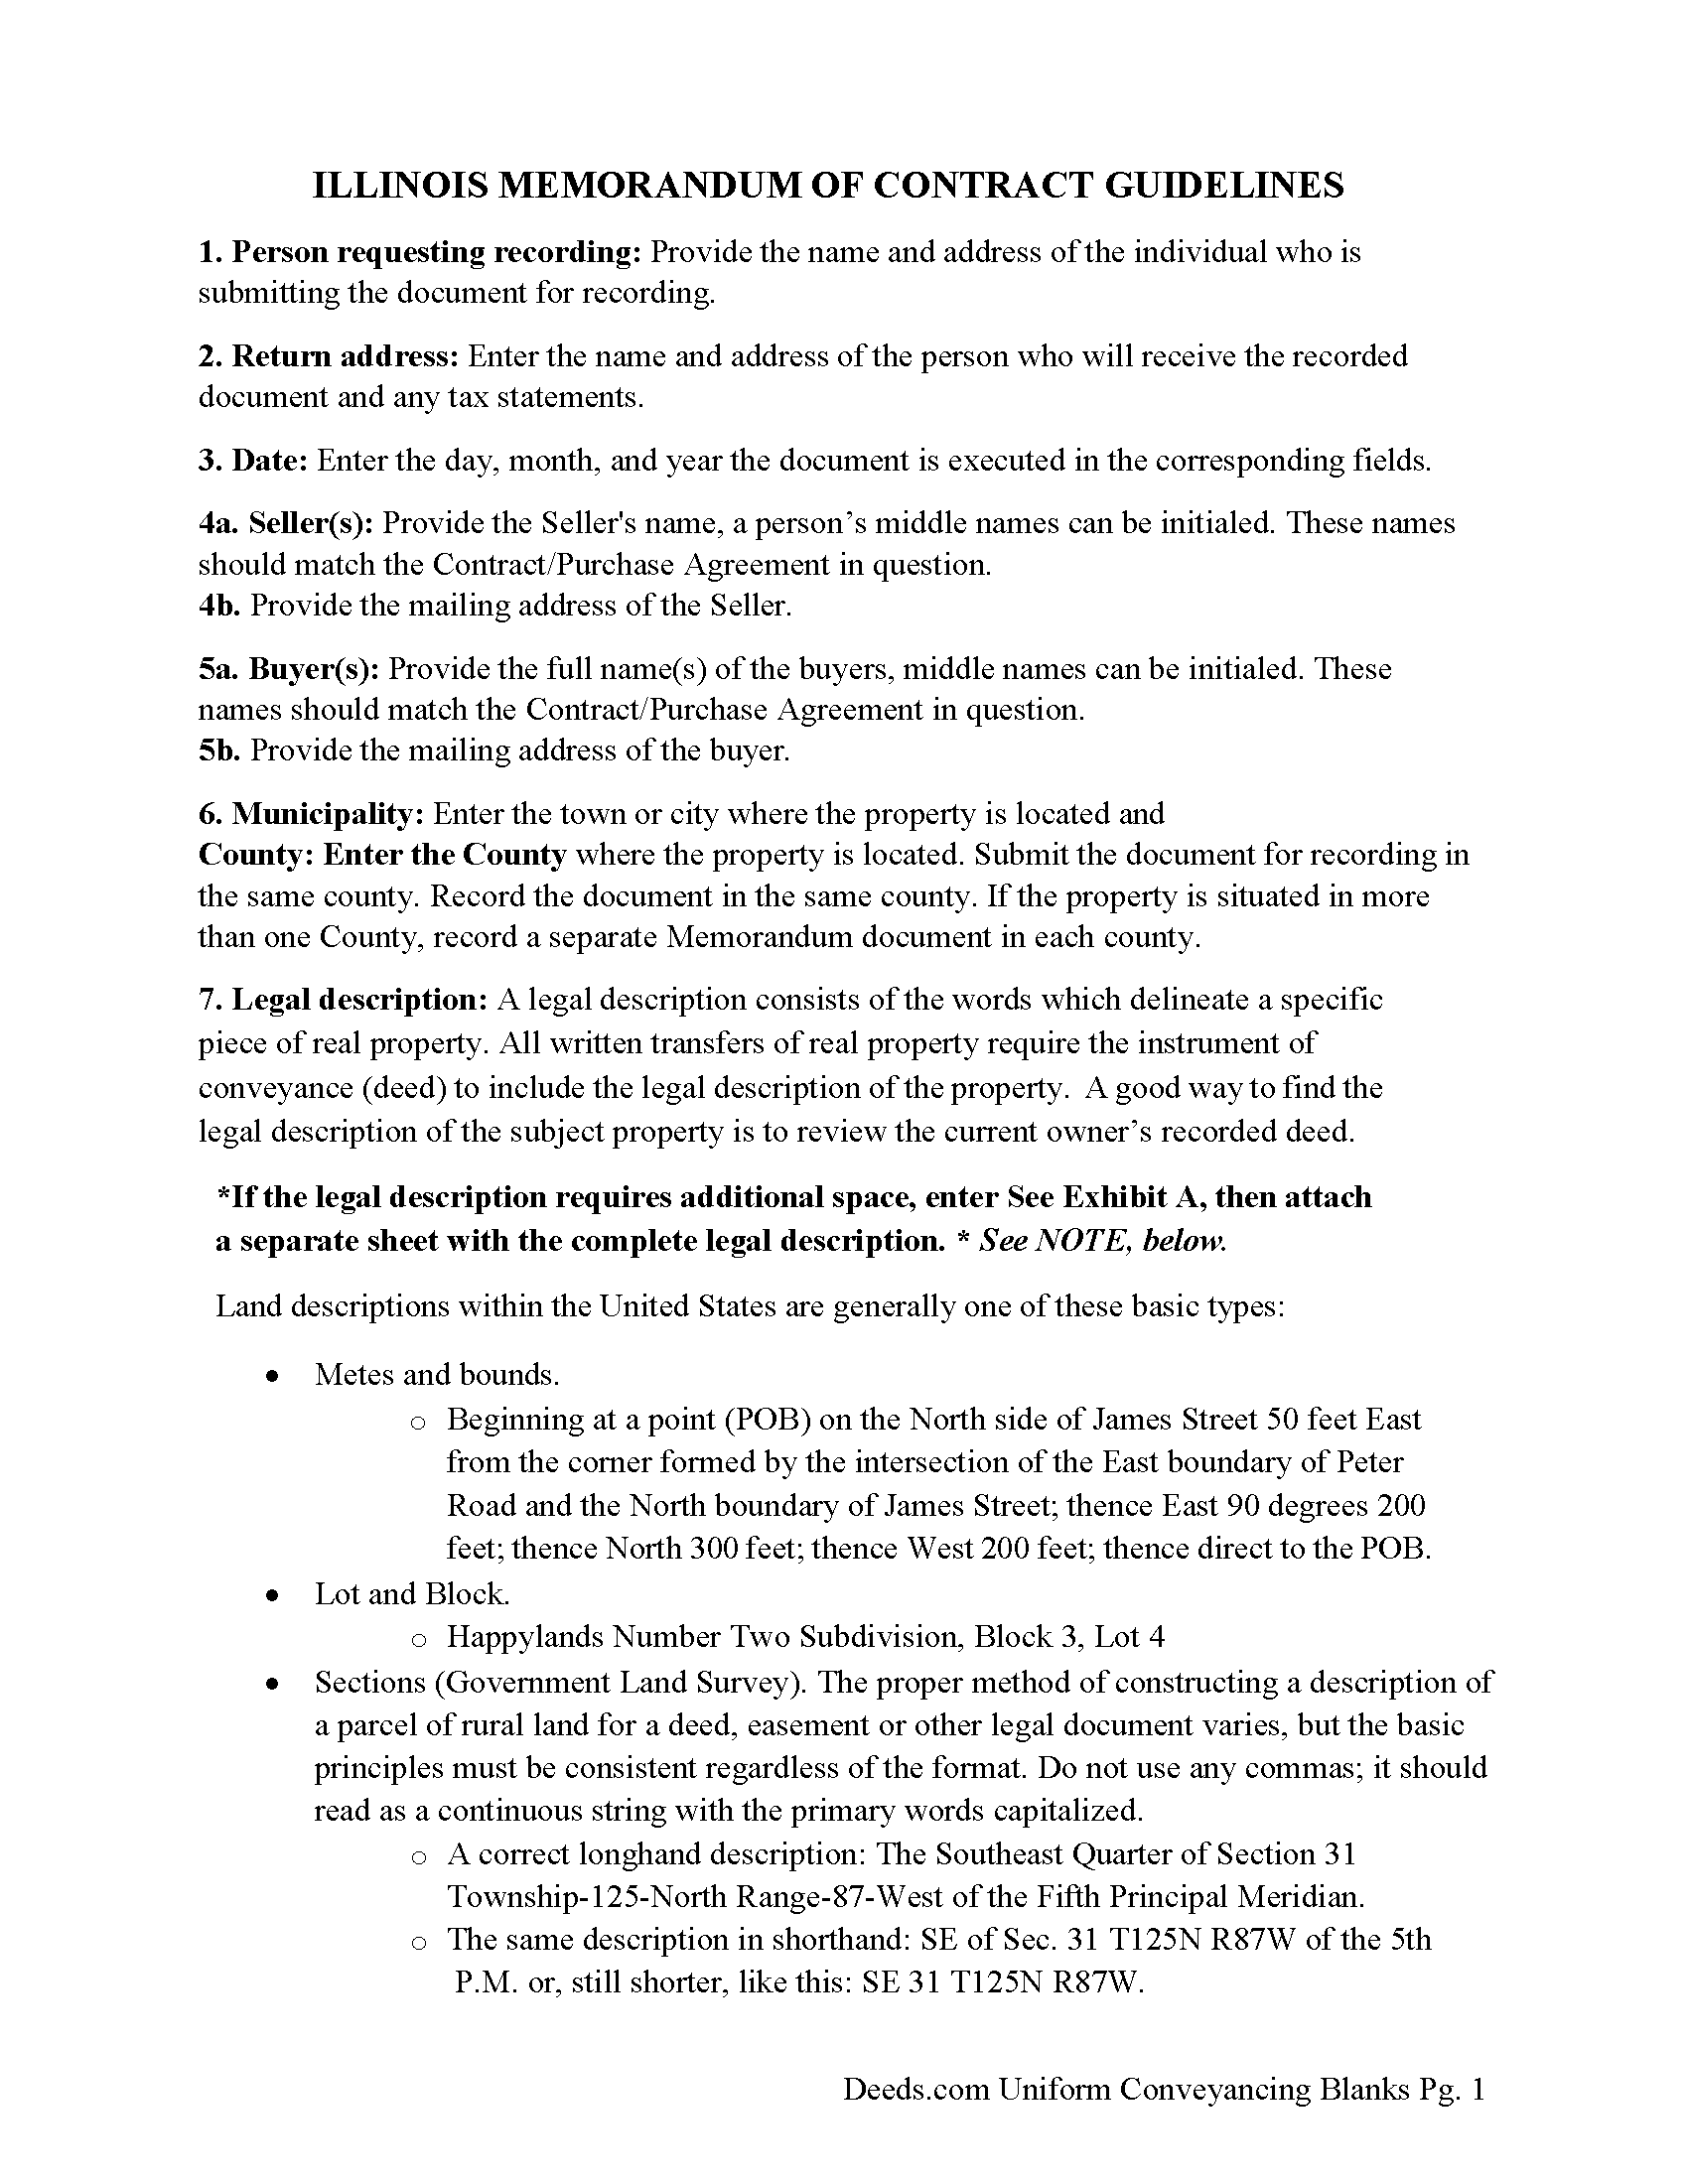 Ogle County Memorandum of an Installment Sales Contract Guide